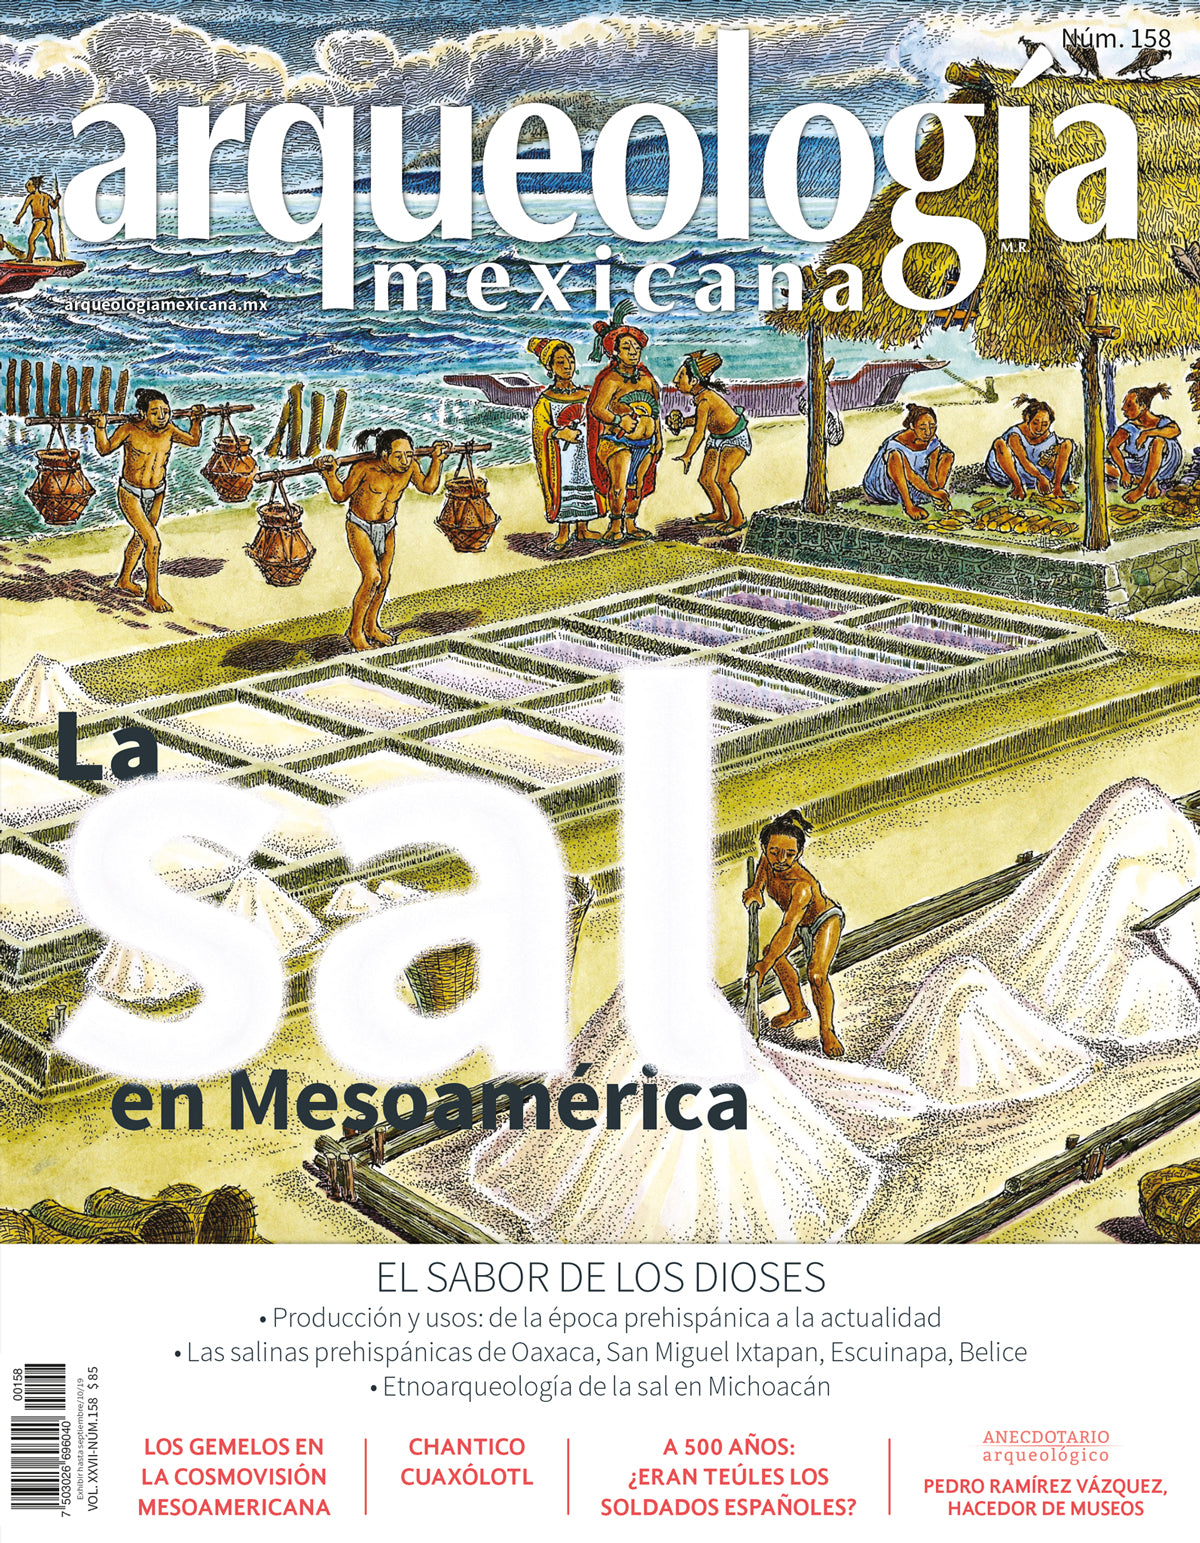 La sal en Mesoamérica